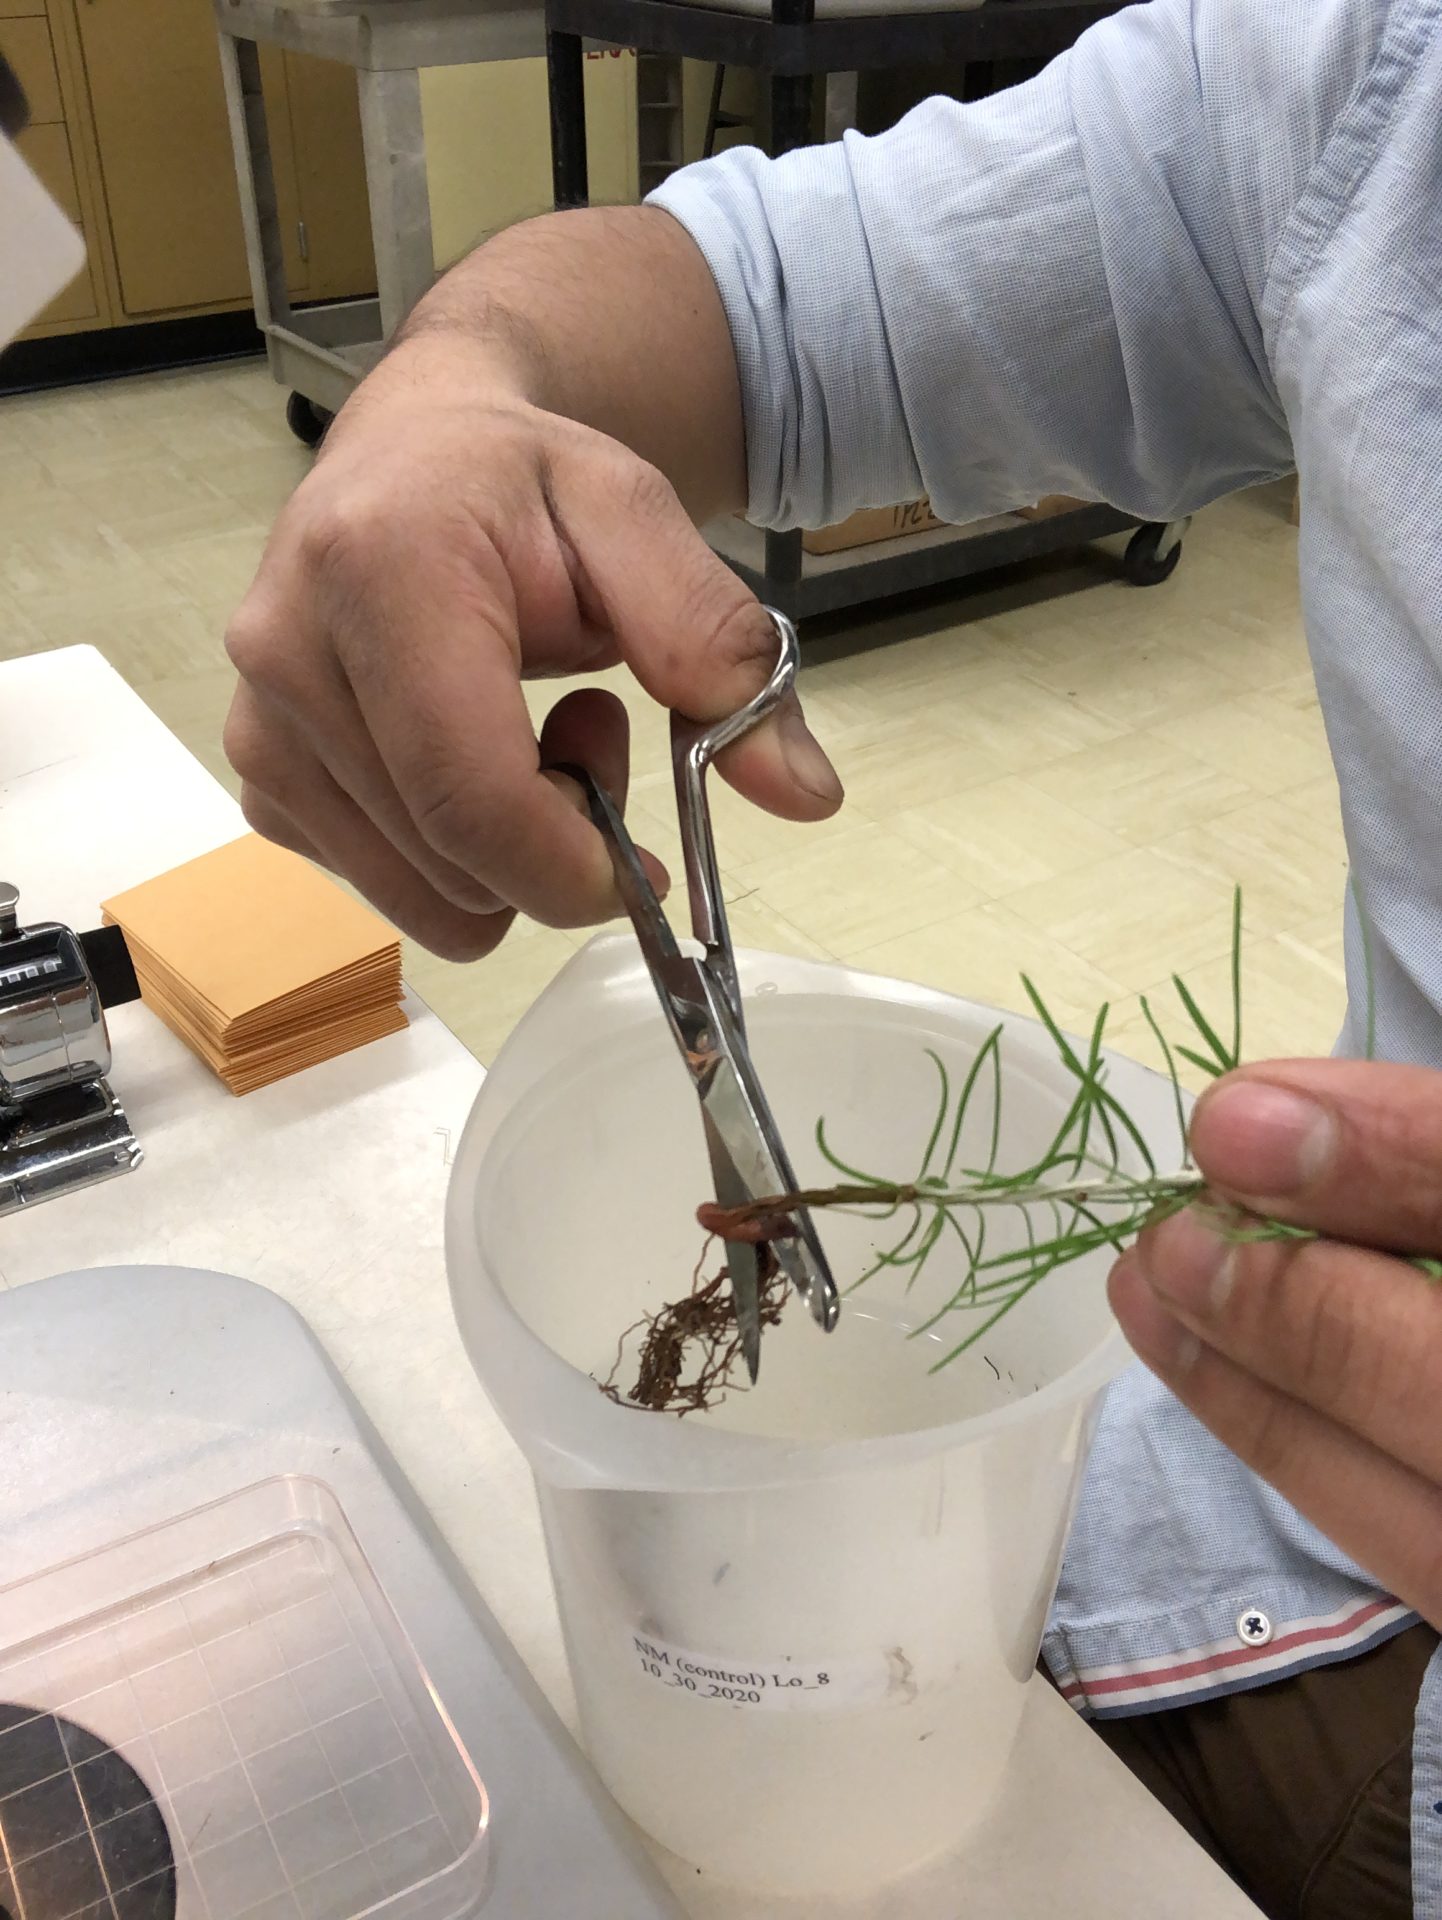 Hand using scissors to trim plant